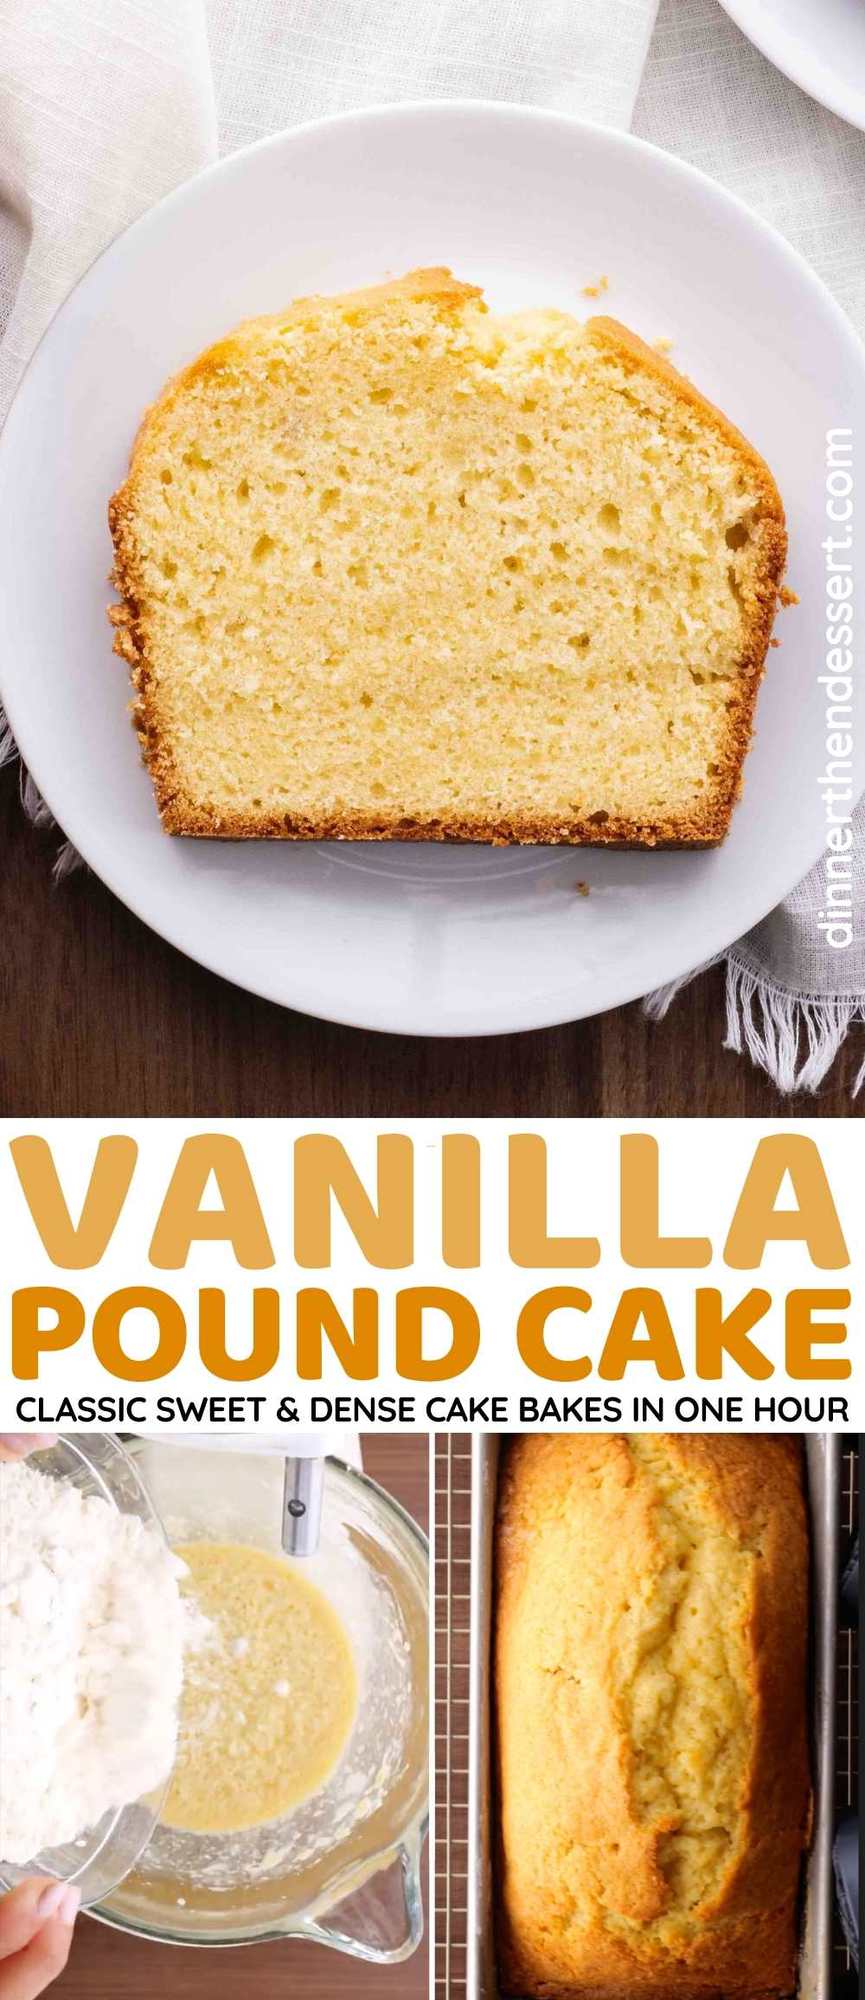 https://dinnerthendessert.com/wp-content/uploads/2019/01/Vanilla-Pound-Cake-L-1.jpg